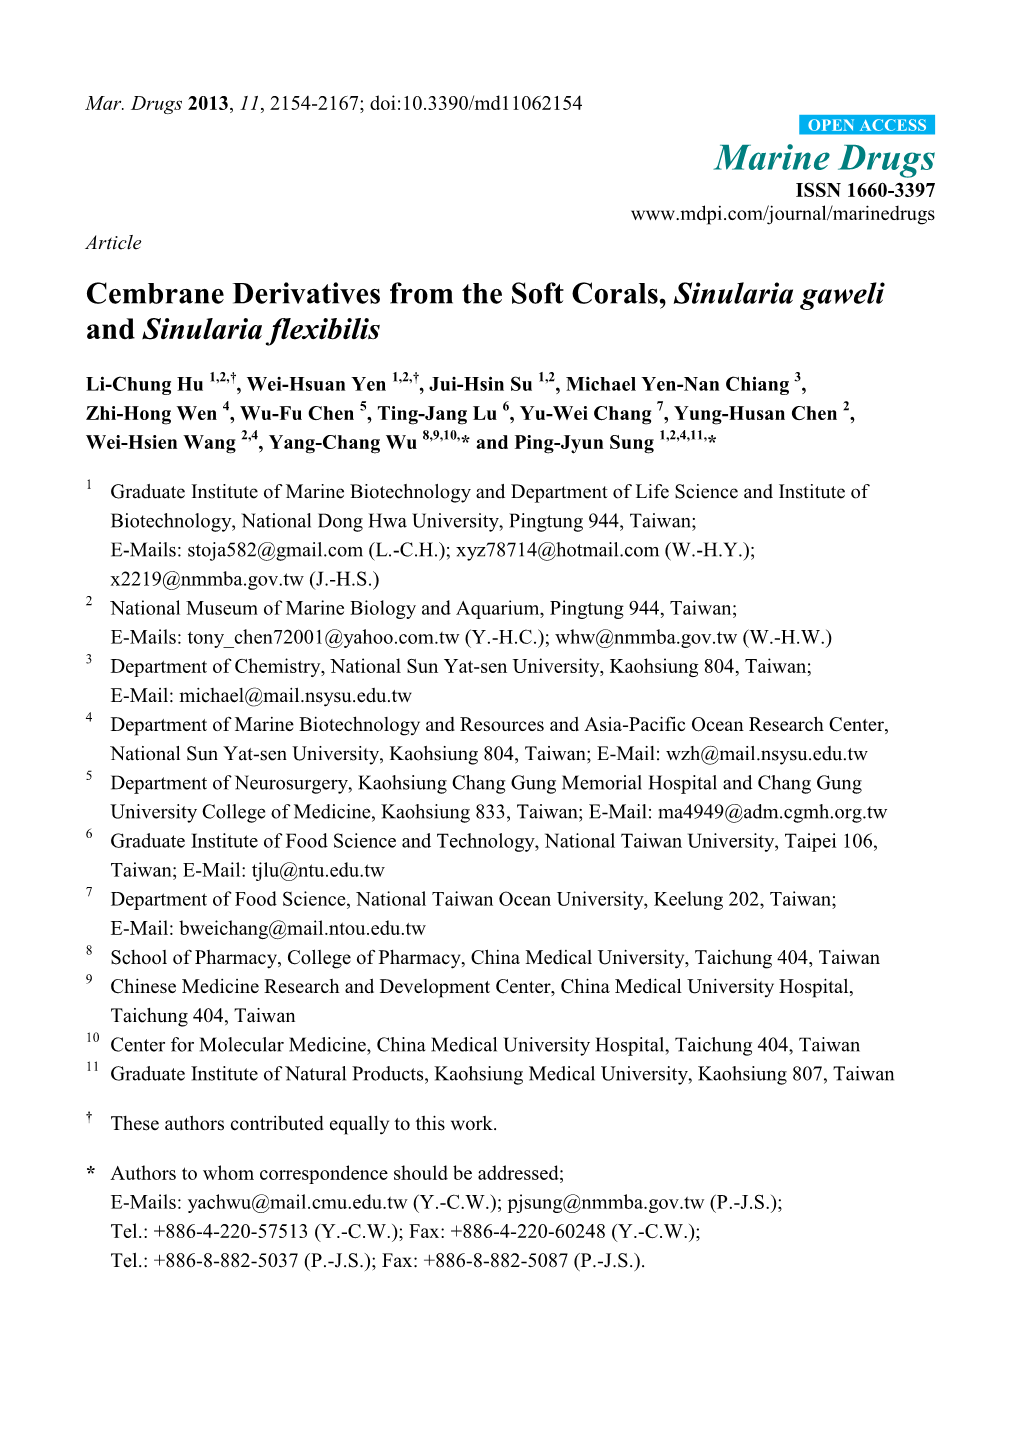 Cembrane Derivatives from the Soft Corals, Sinularia Gaweli and Sinularia Flexibilis